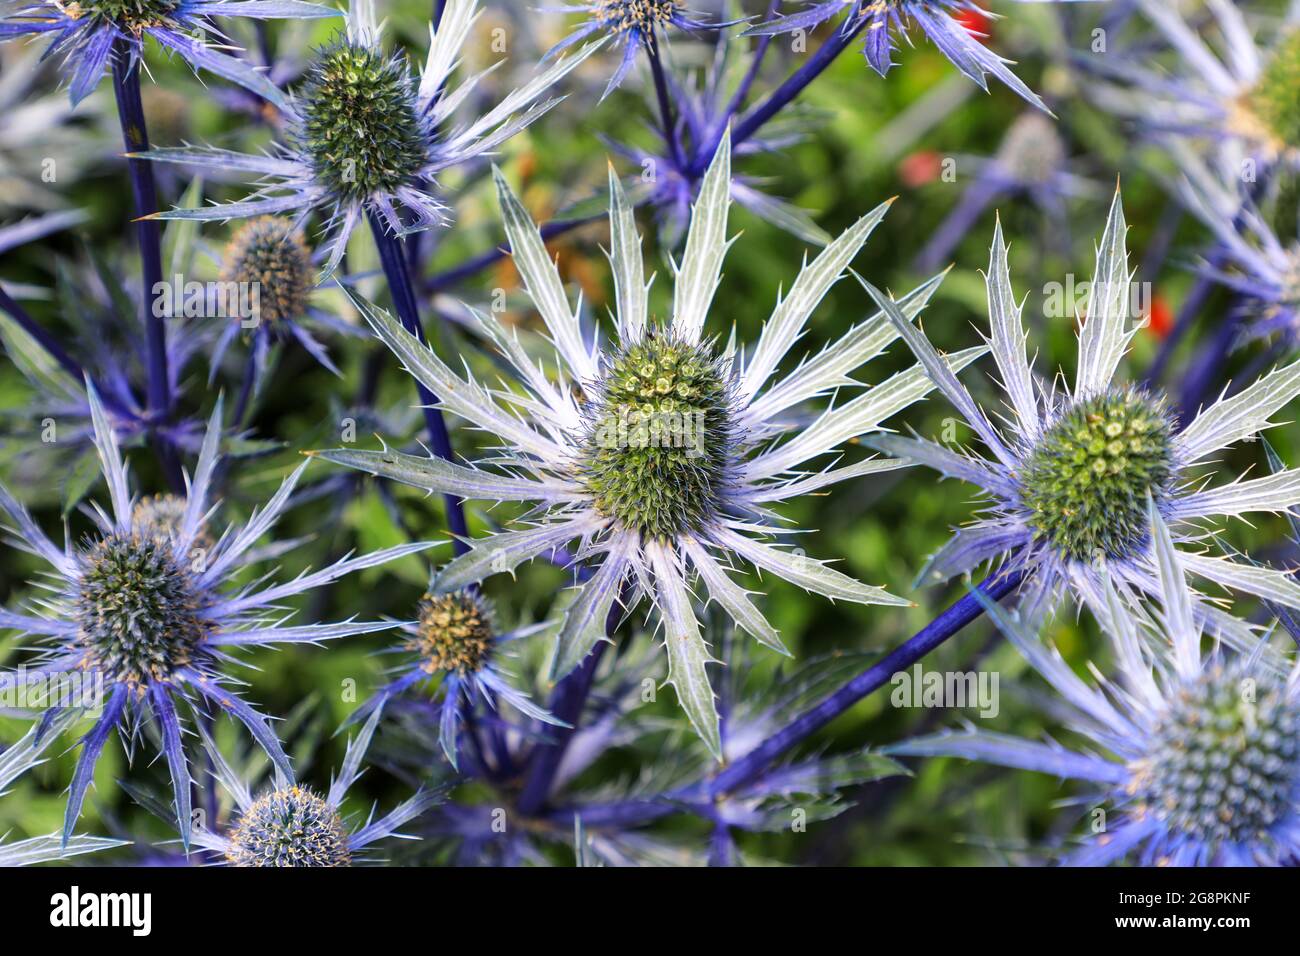 The bright blue spiky flowers of a Sea Holly or Eryngo (Eryngium), England, UK Stock Photo